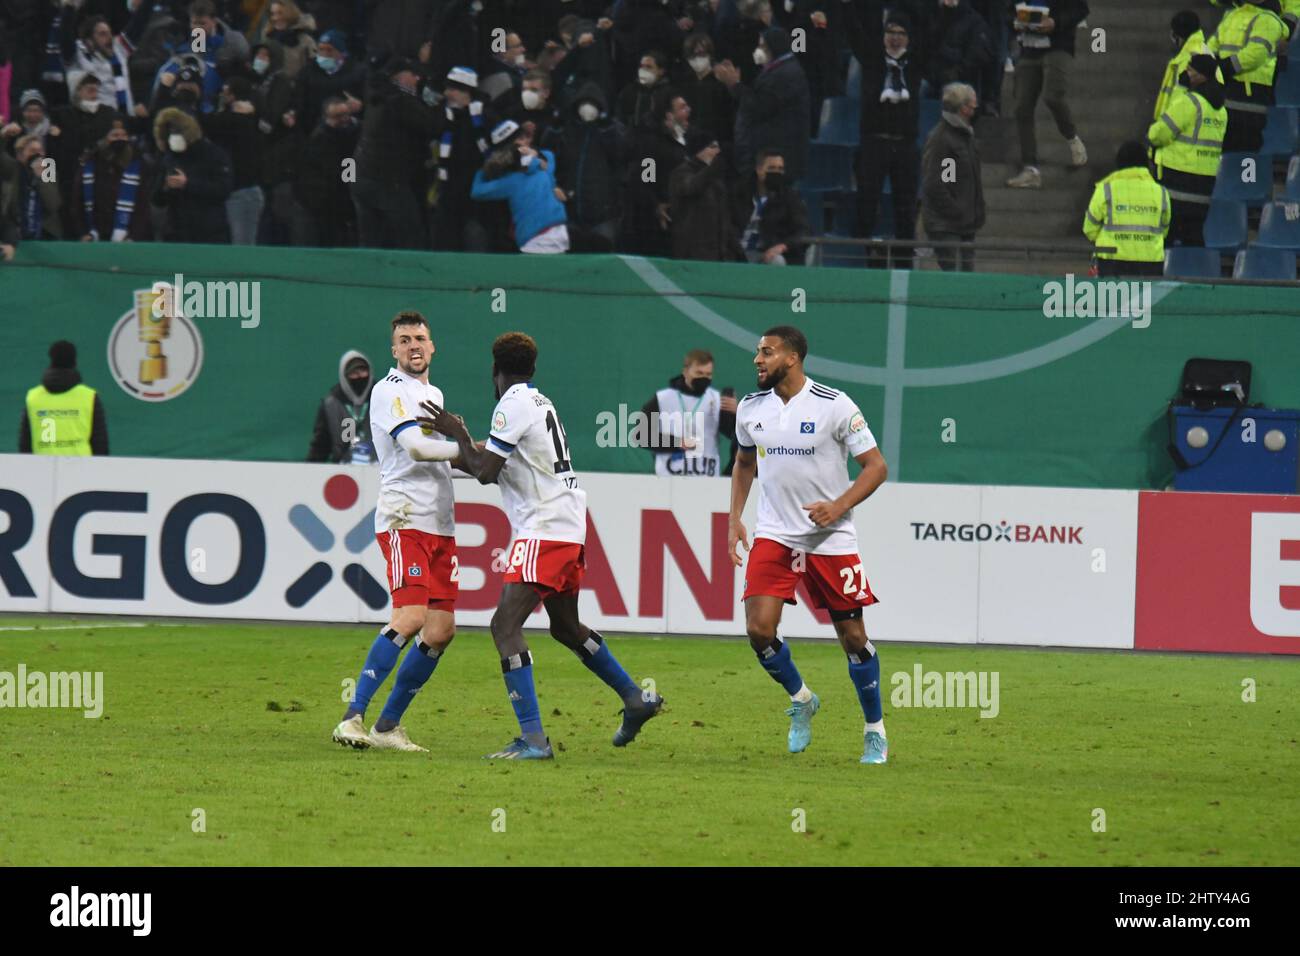 Seconda lega Karlsruher sc verliert im DFB Pokal gegen Hamburger Sv HSV Volksparkstadion 2 marzo 2022 Foto Stock